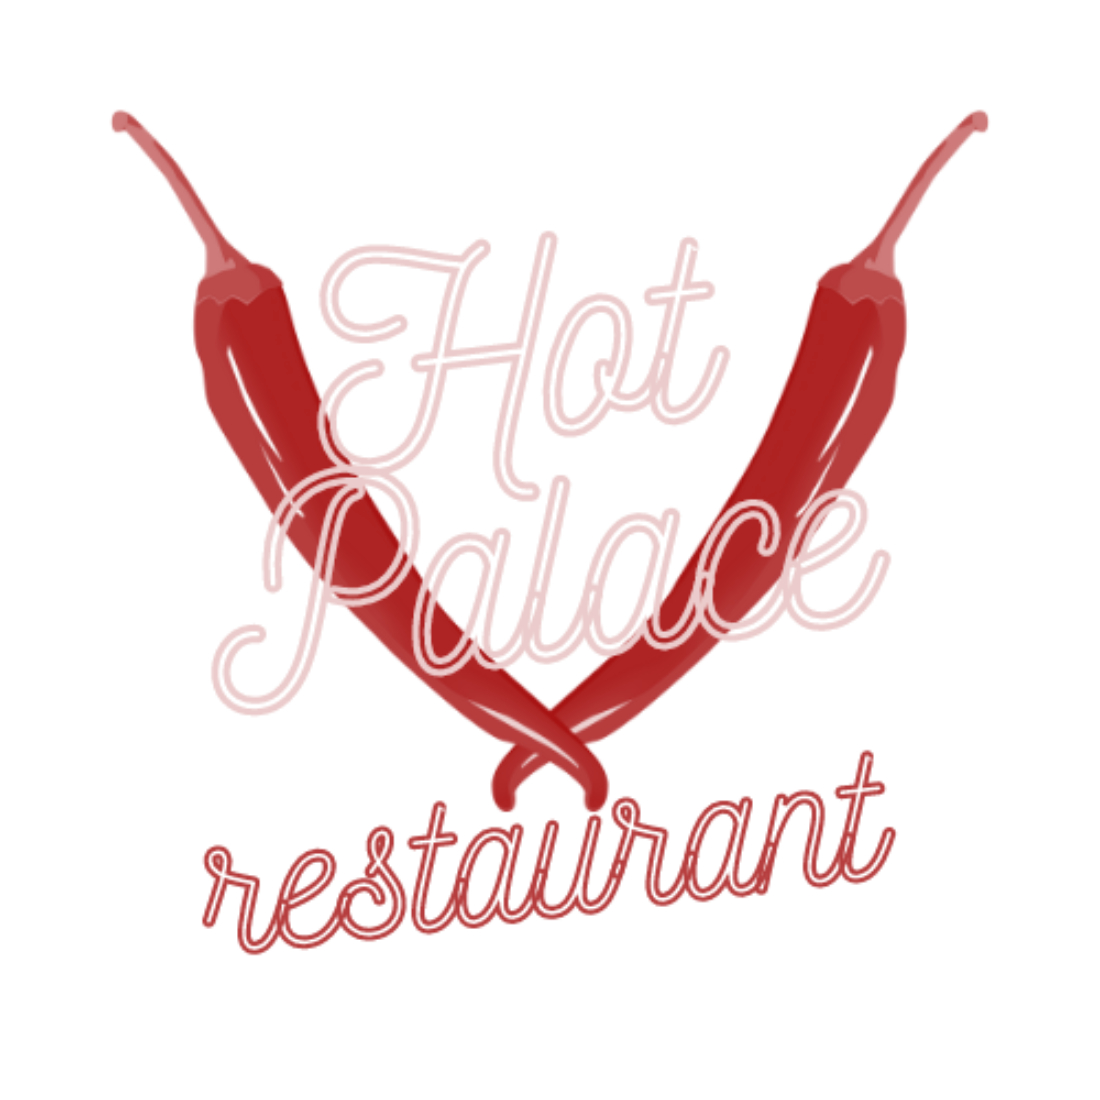 Hot Palace Restaurant Logo Design cover image.